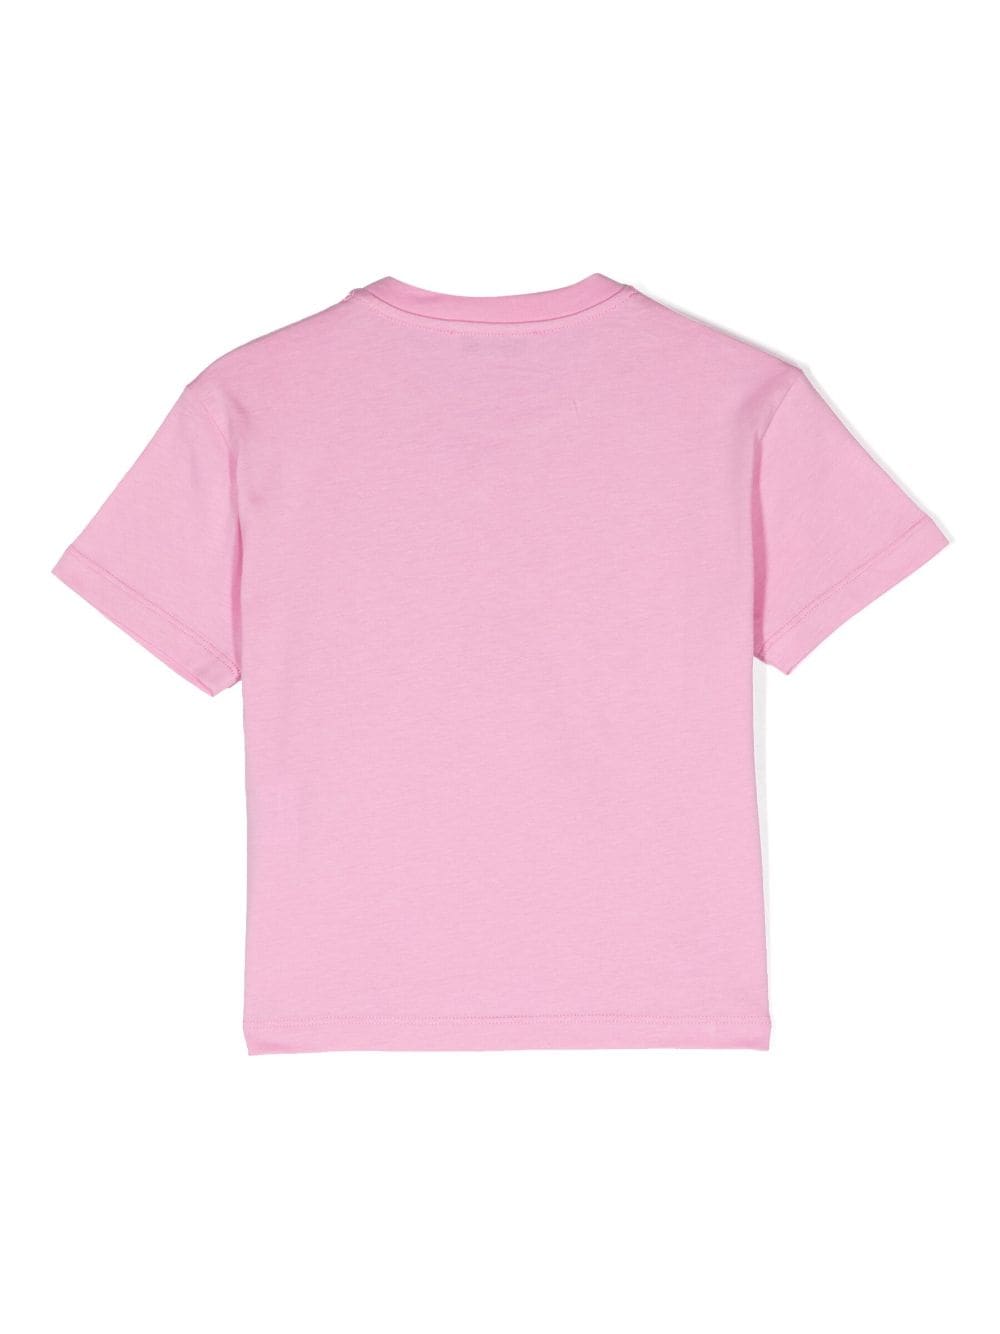 Pink cotton jersey girl MSGM t-shirt | Carofiglio Junior